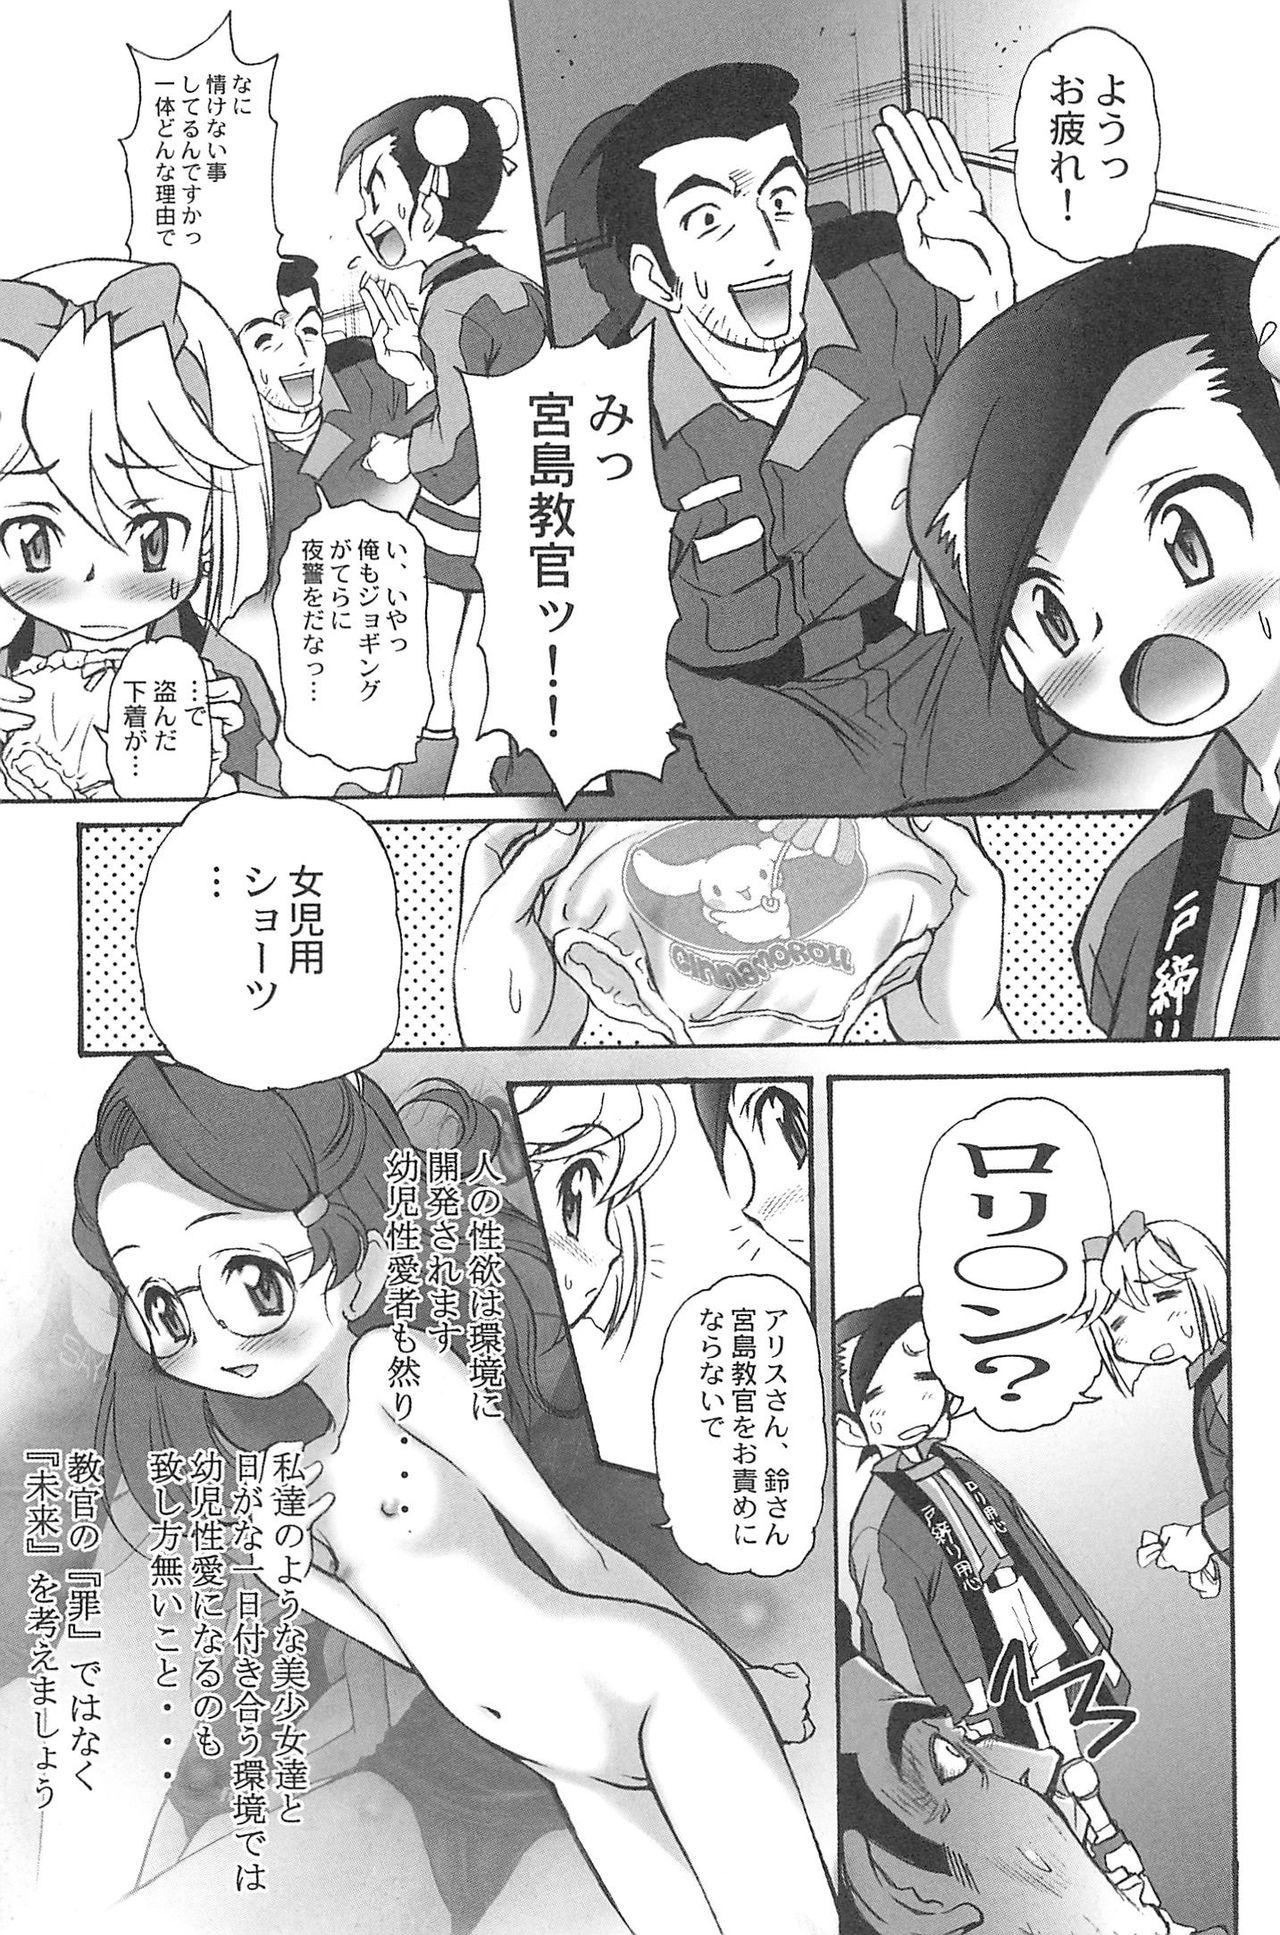 Ariake International X-rated Manga Festival Mercy Rabbit SPECIAL 76